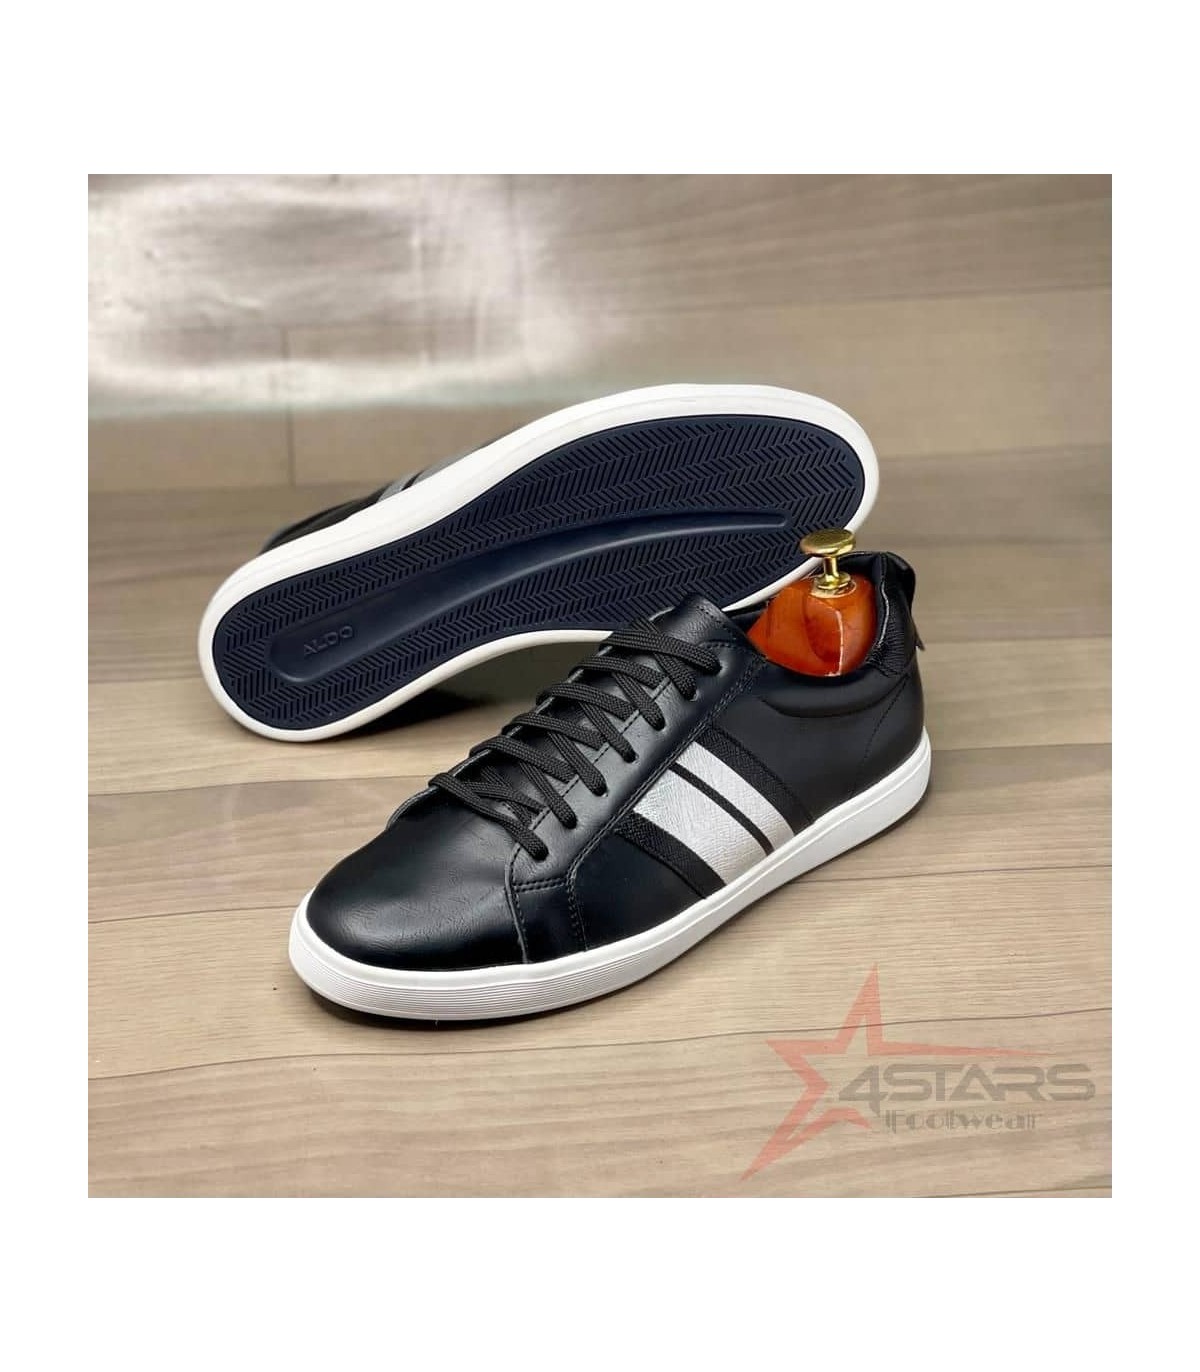 Aldo Leather Sneakers - Black/White